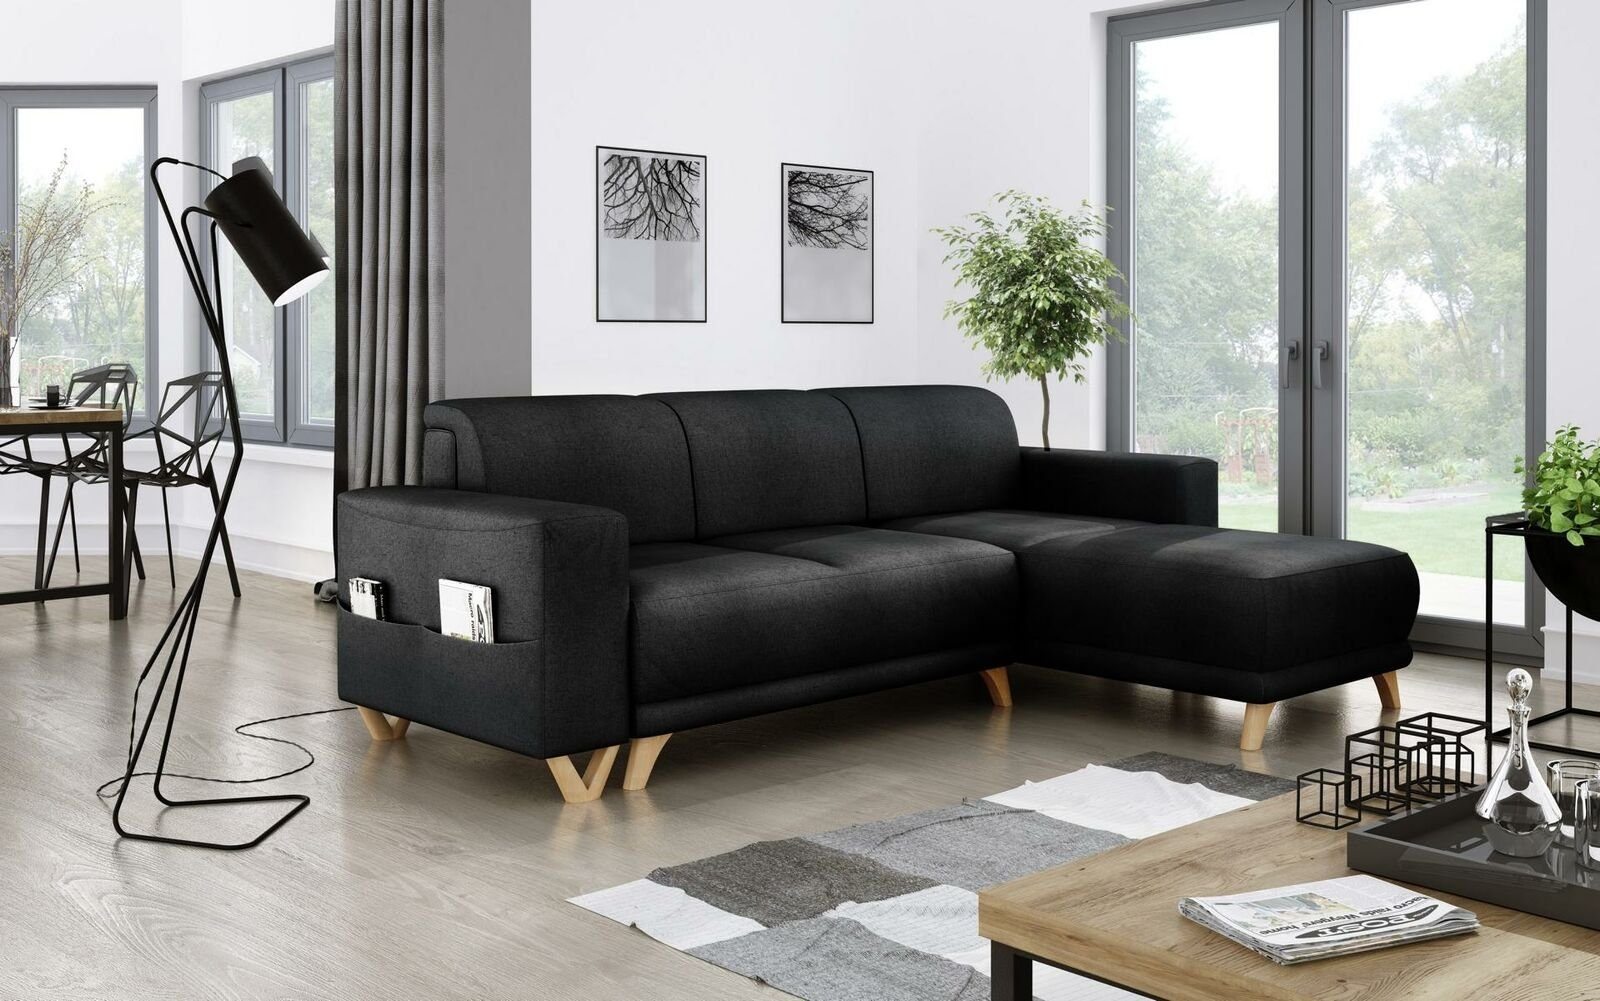 JVmoebel Sofa Design Ecksofa L-Form Sofa Couch Polster Schlafsofa Textil Bettfunkt, Mit Bettfunktion Schwarz